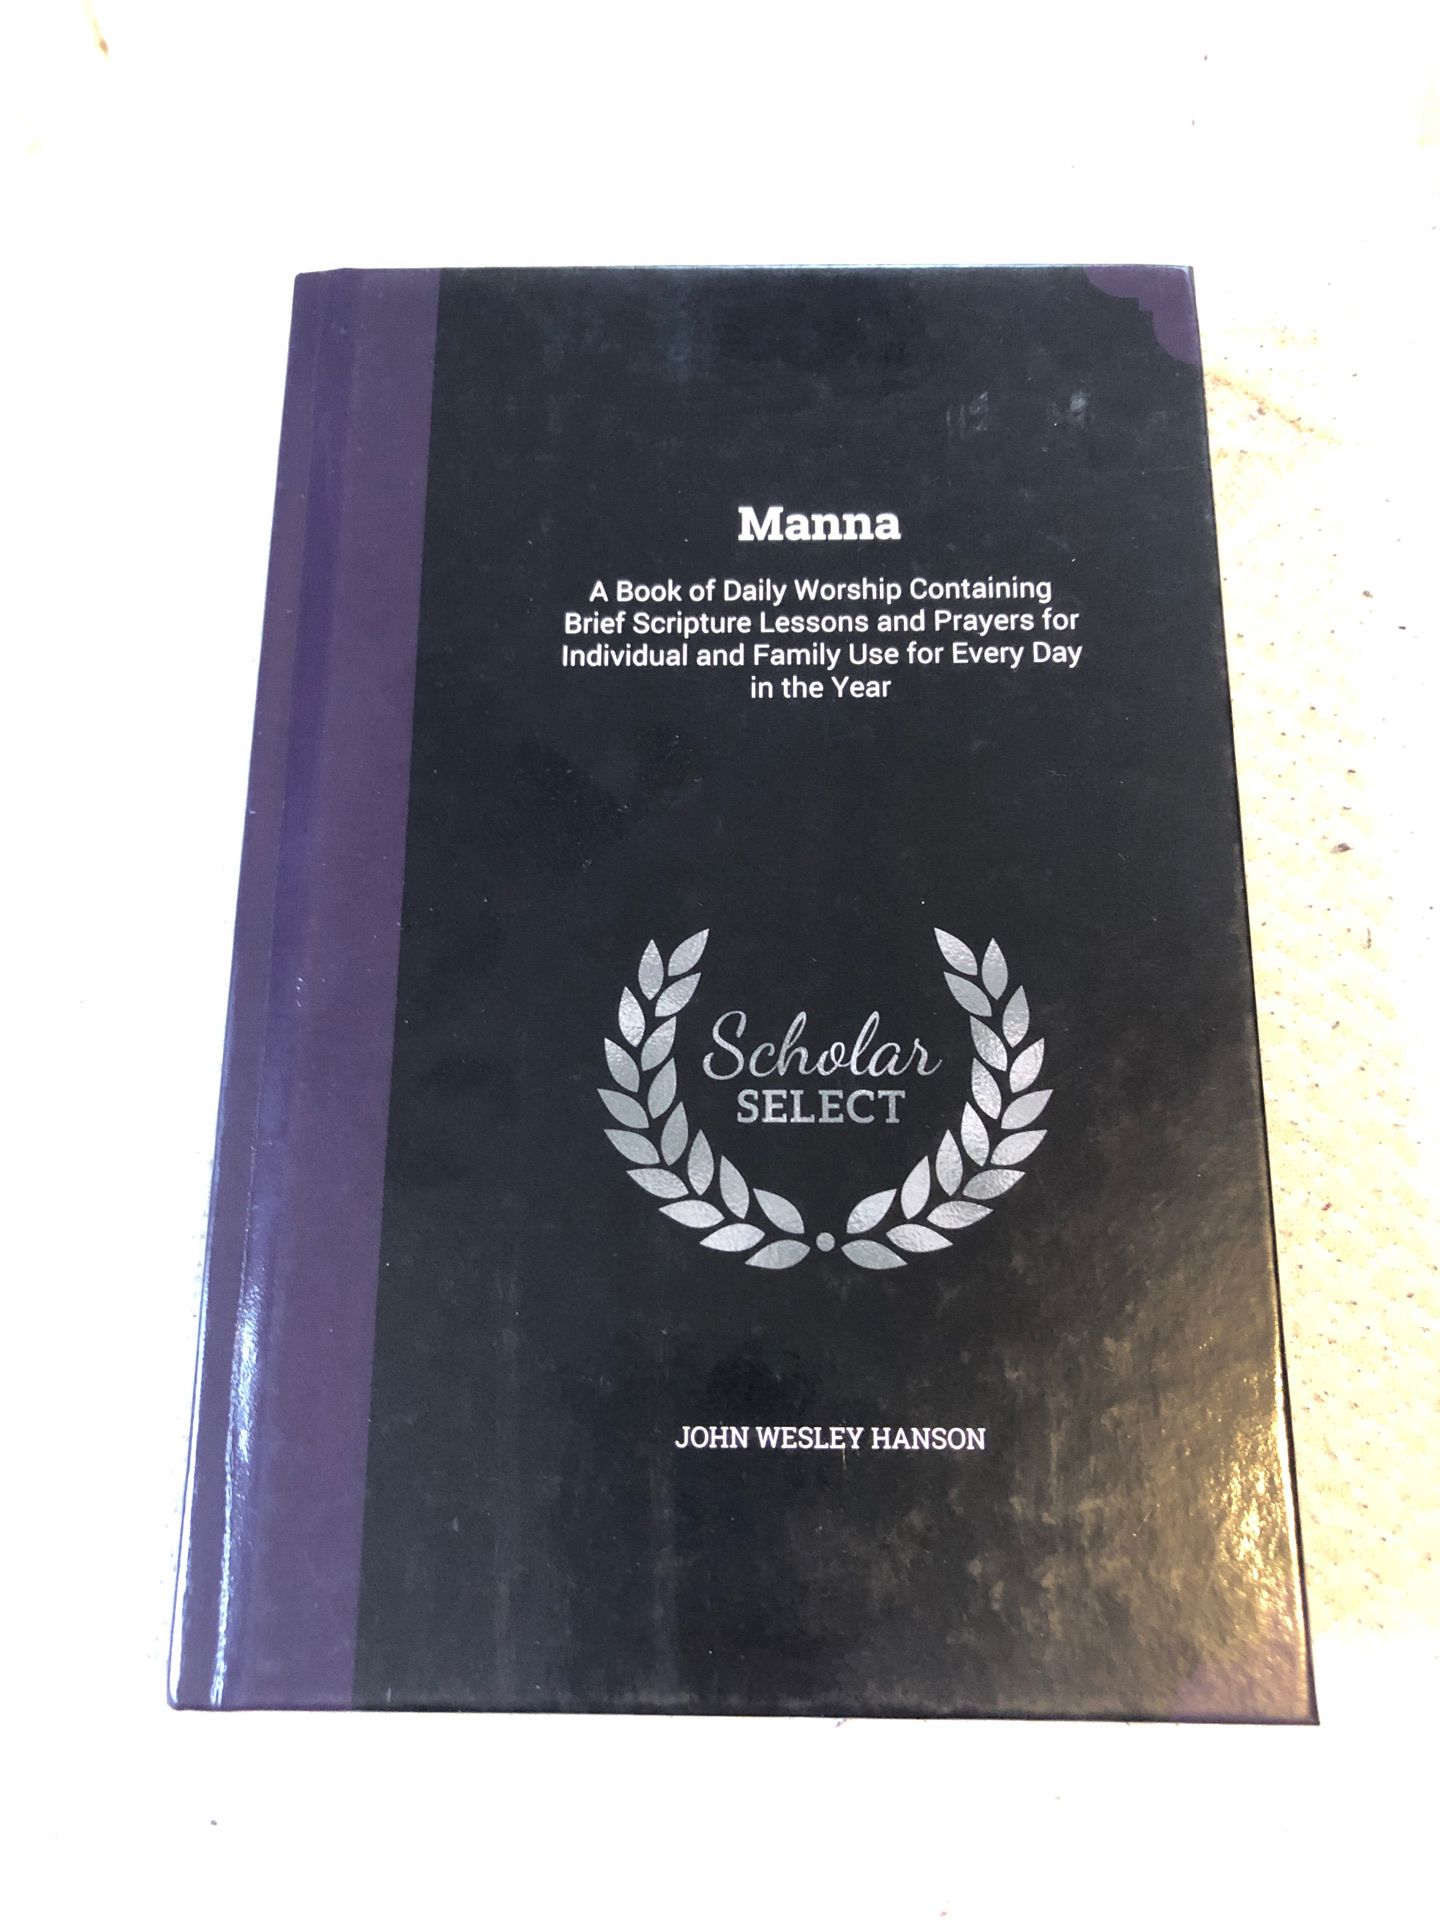 Manna by John Wesley Hanson hardcover